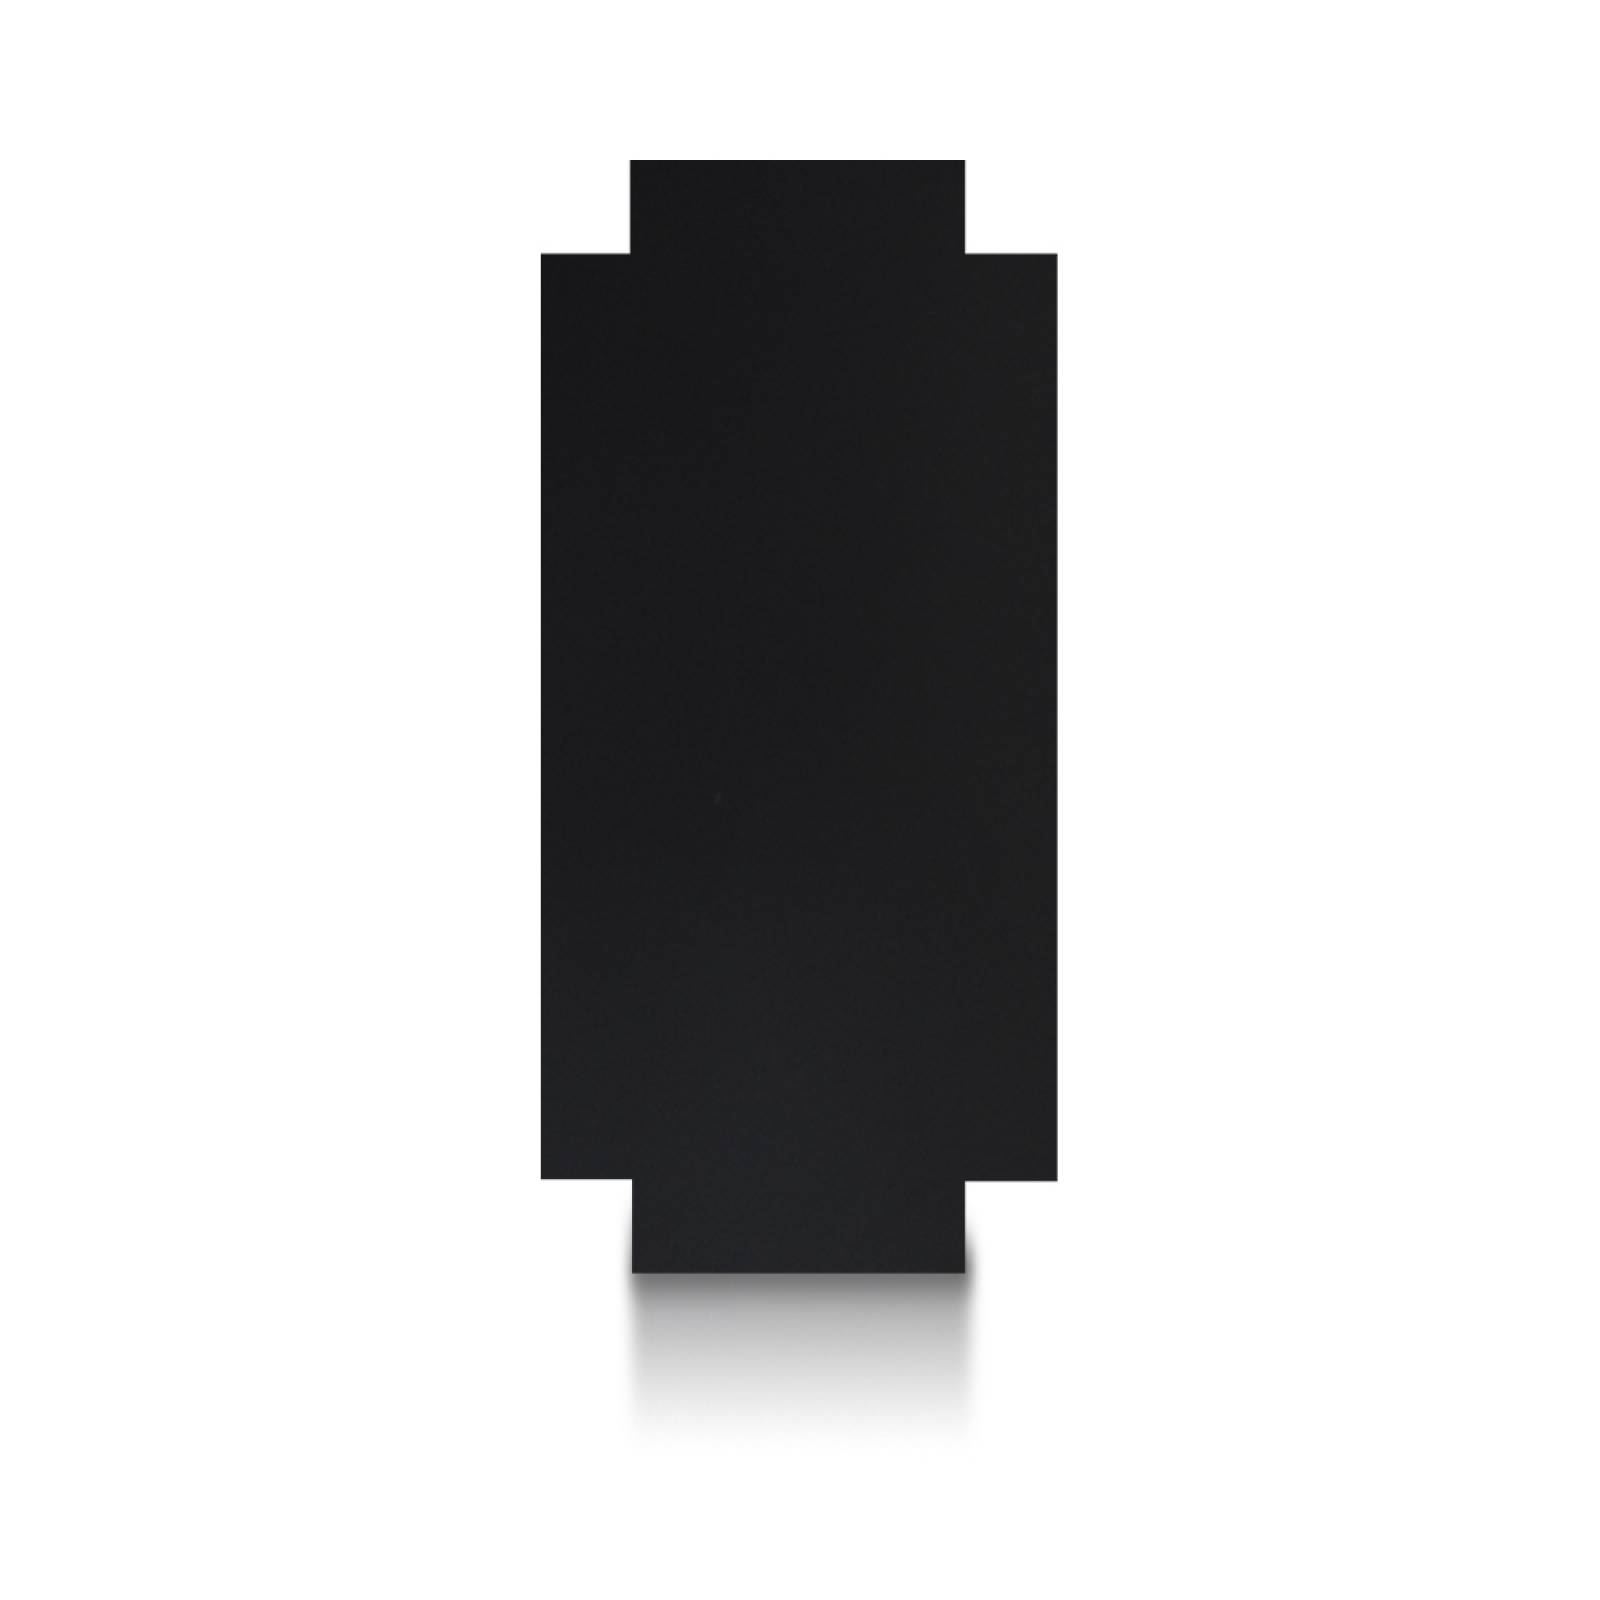 Aislante Cerámico Protector Térmico para Pared de 75 x 35 cm Negro, Mod: 6PTPNe